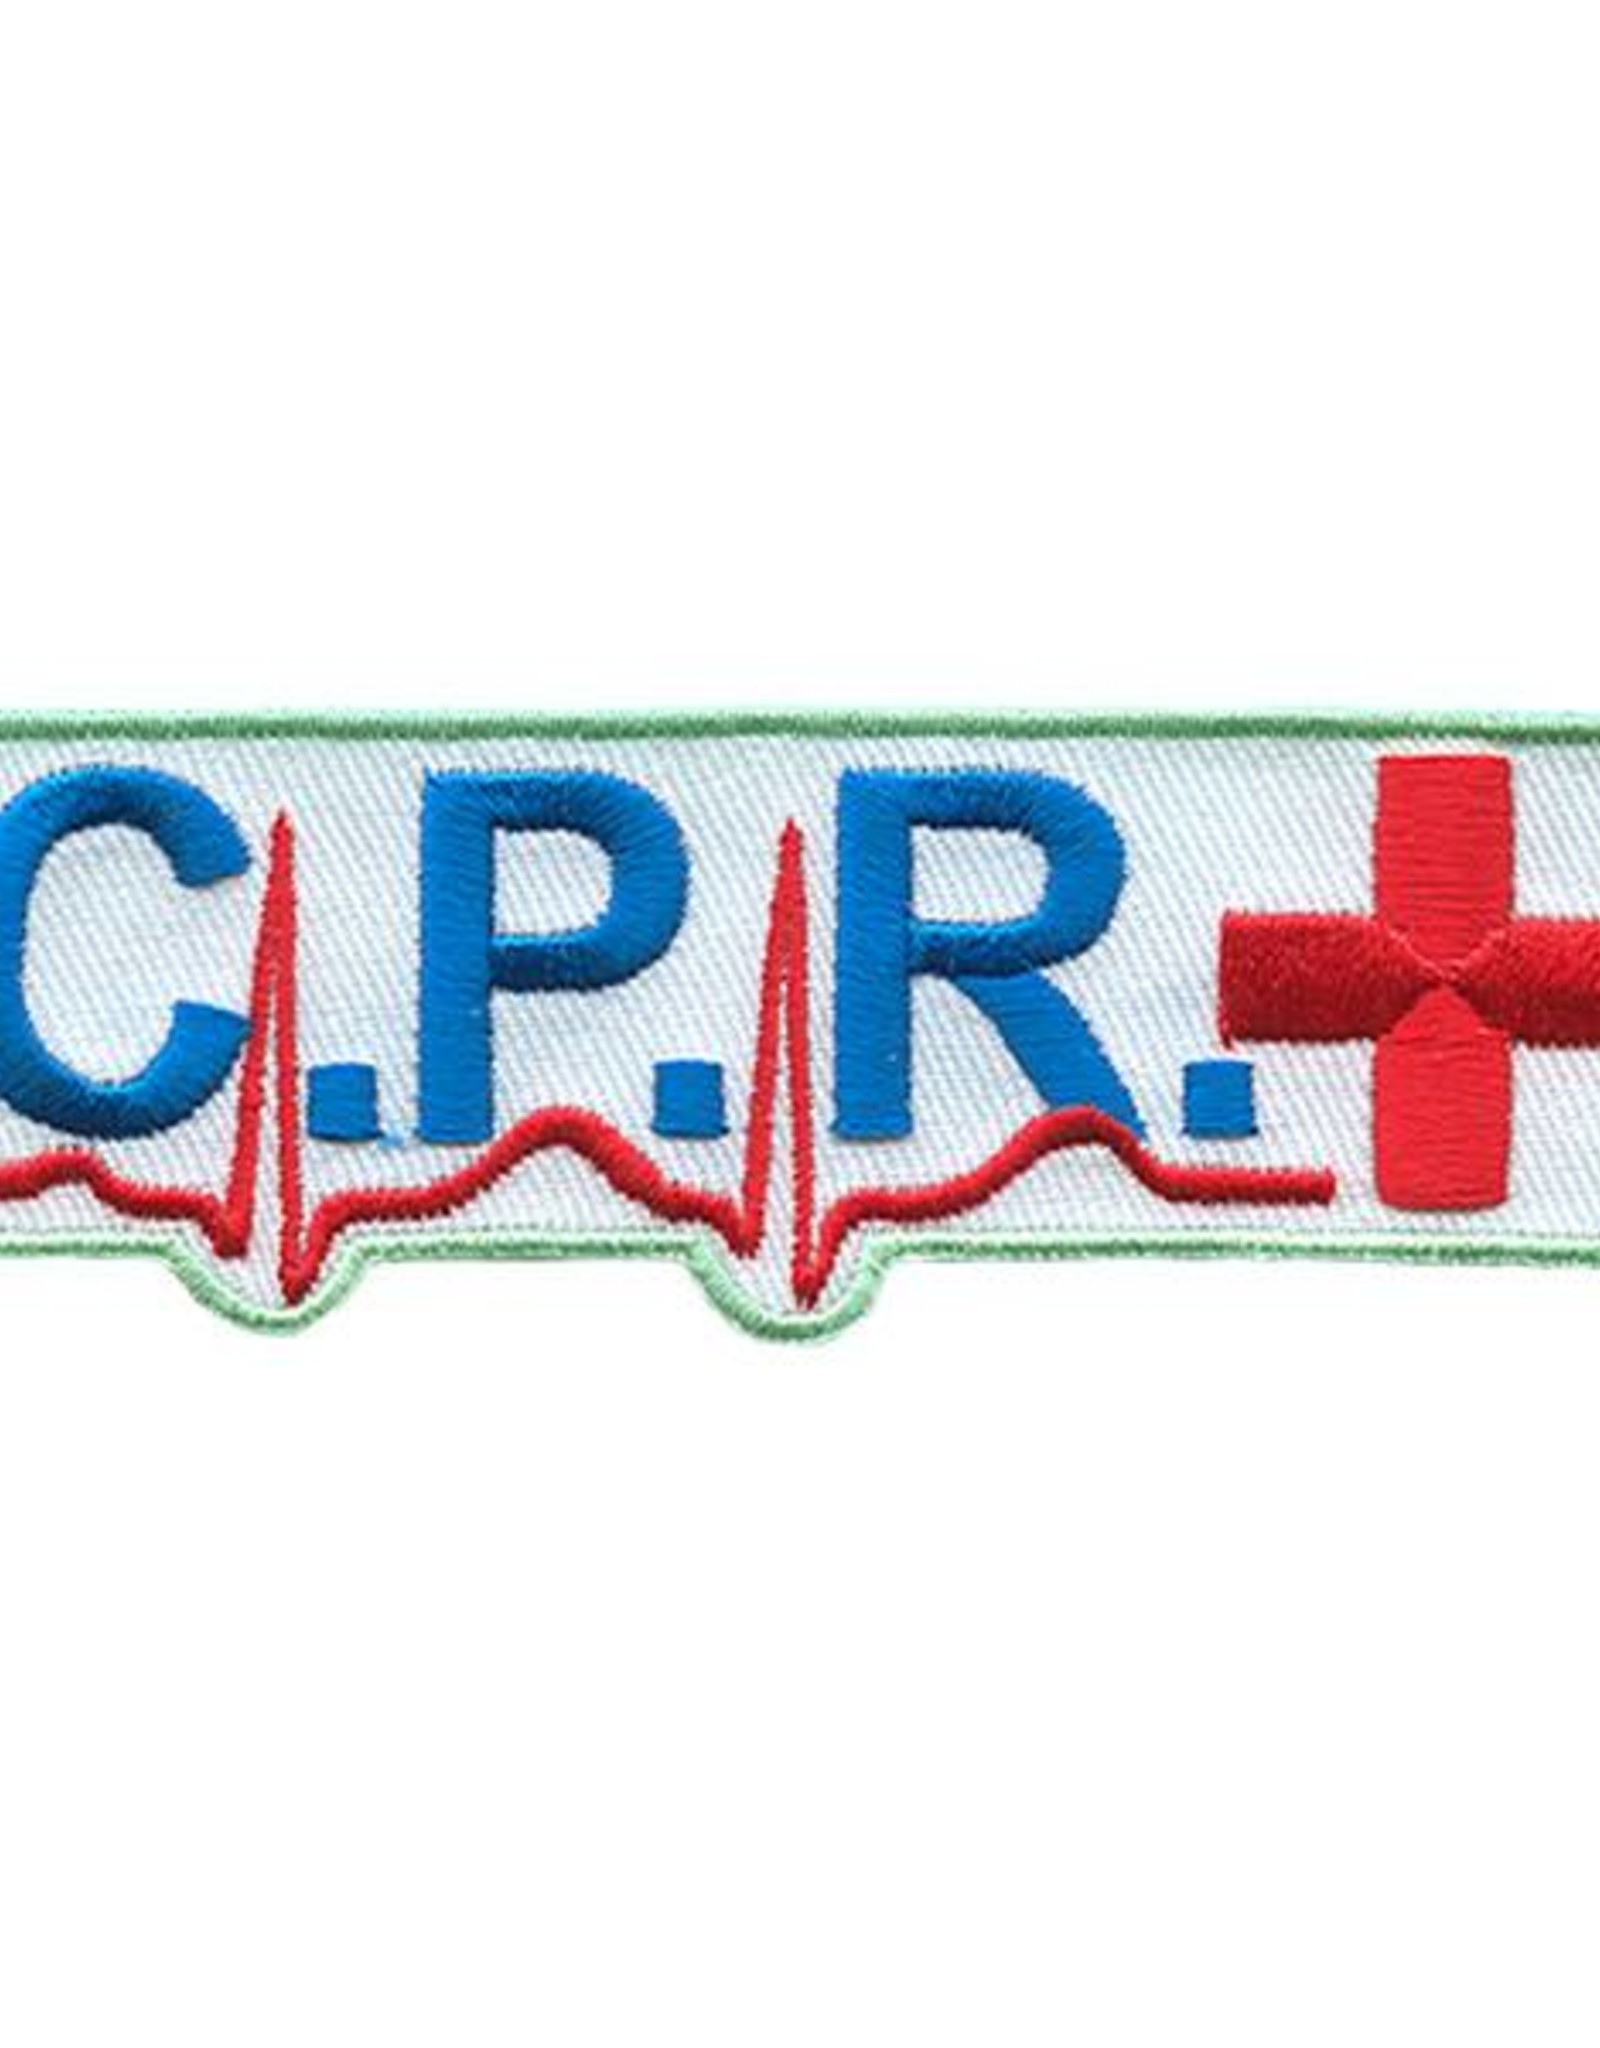 Advantage Emblem & Screen Prnt *CPR Heartbeat Fun Patch